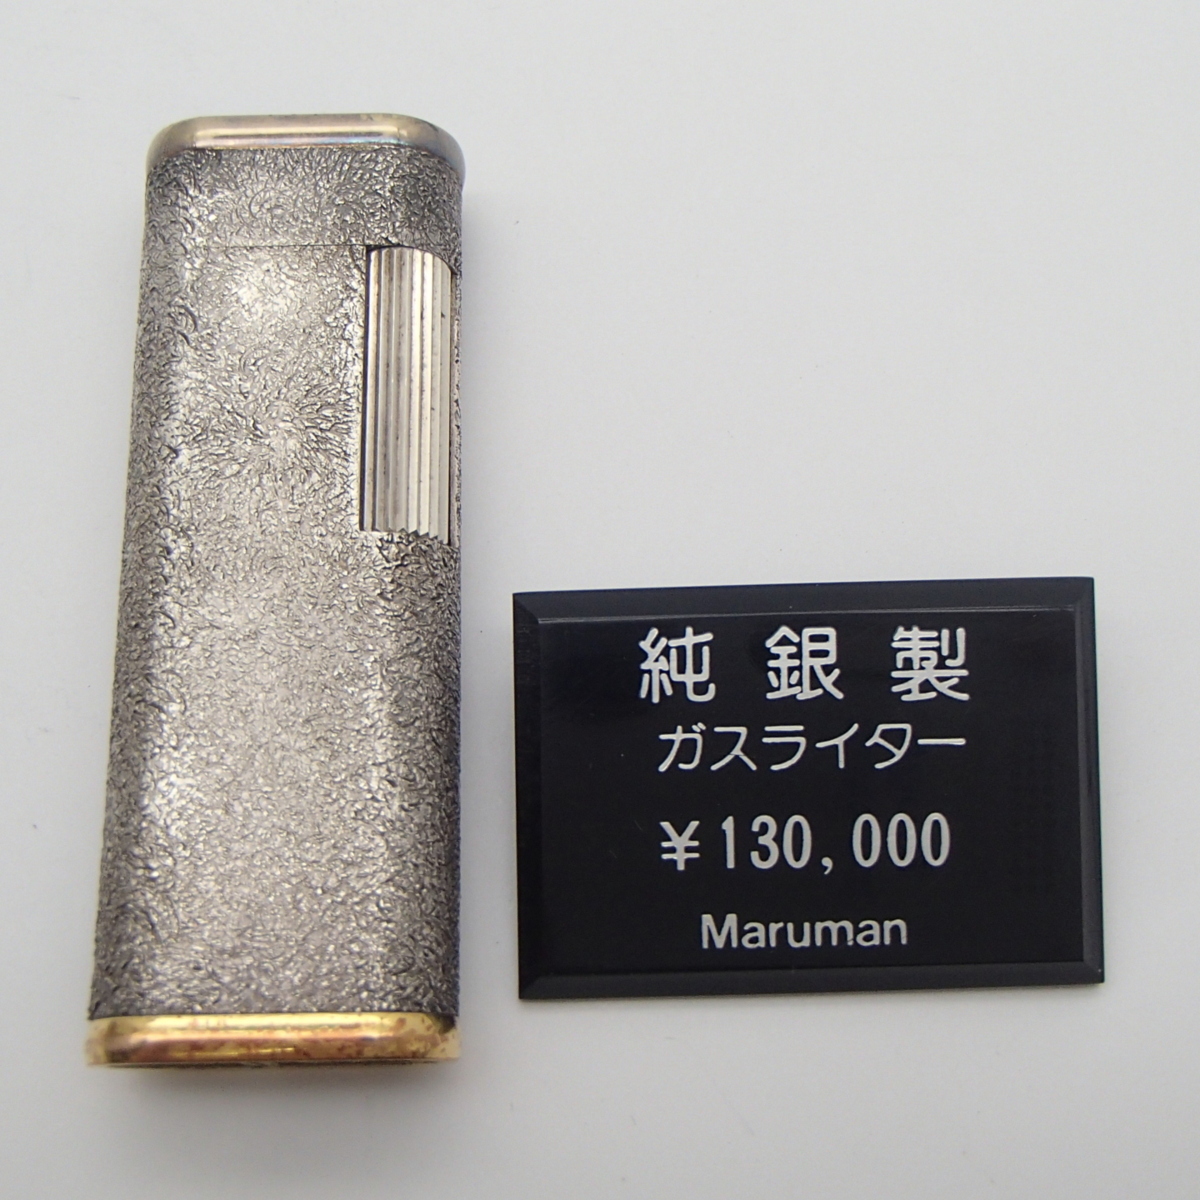 ◎Maruman マルマン ライター GL-74 純銀製 純銀 sv1000 94.8g / ガス